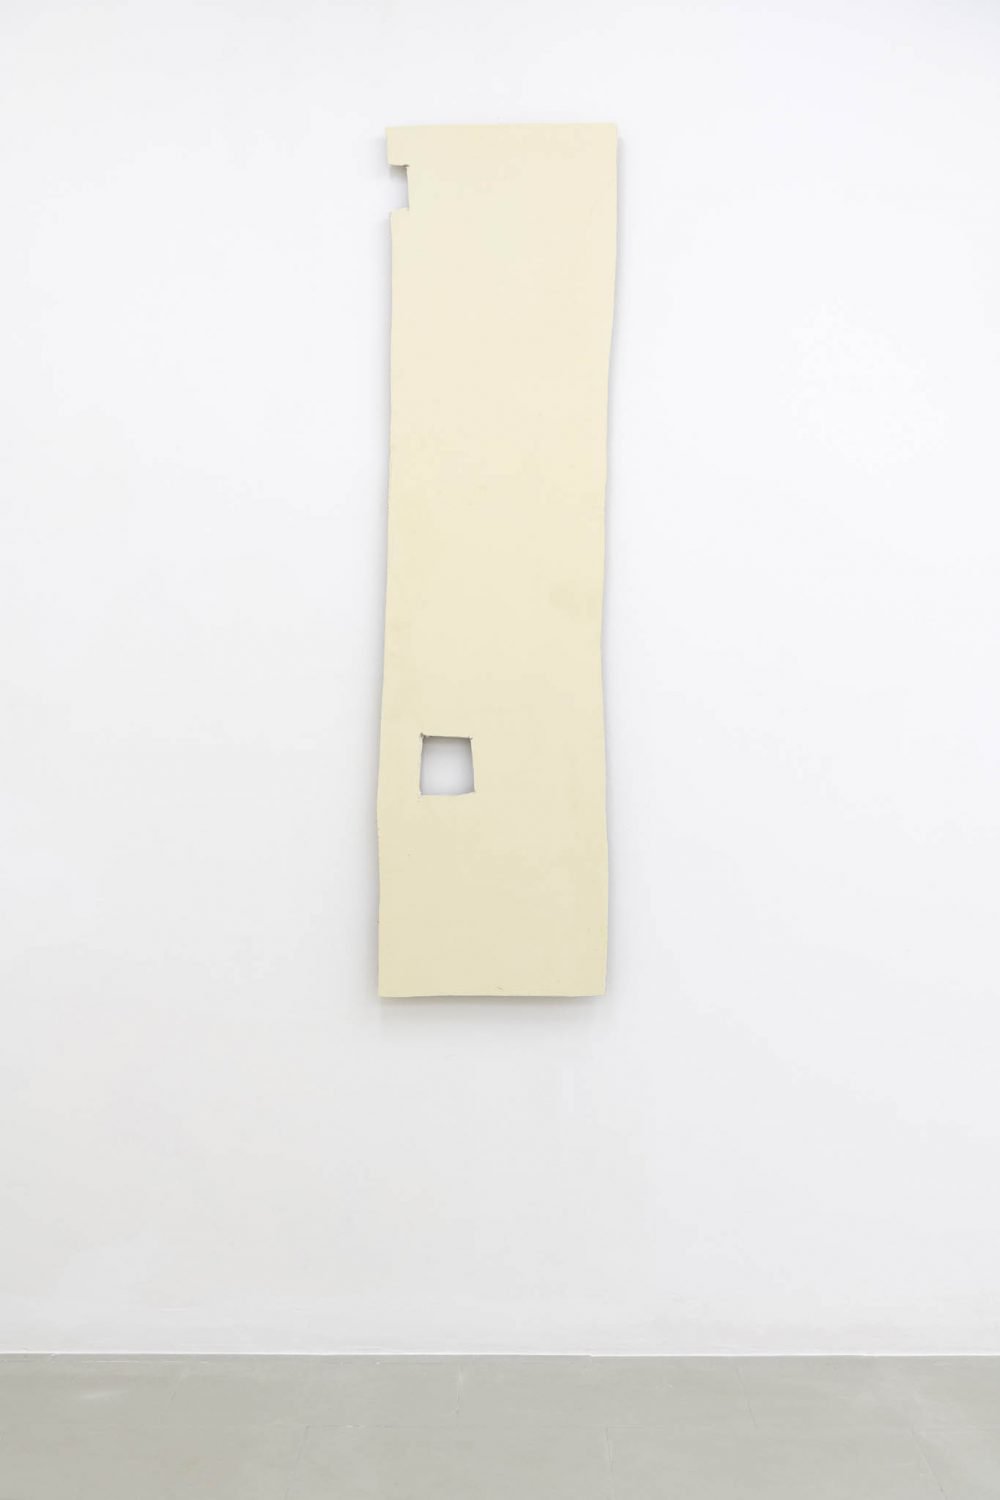 Plamen DejanoffUntitled (Palais Slav), 2019Plasterboard wall190 x 51 cm